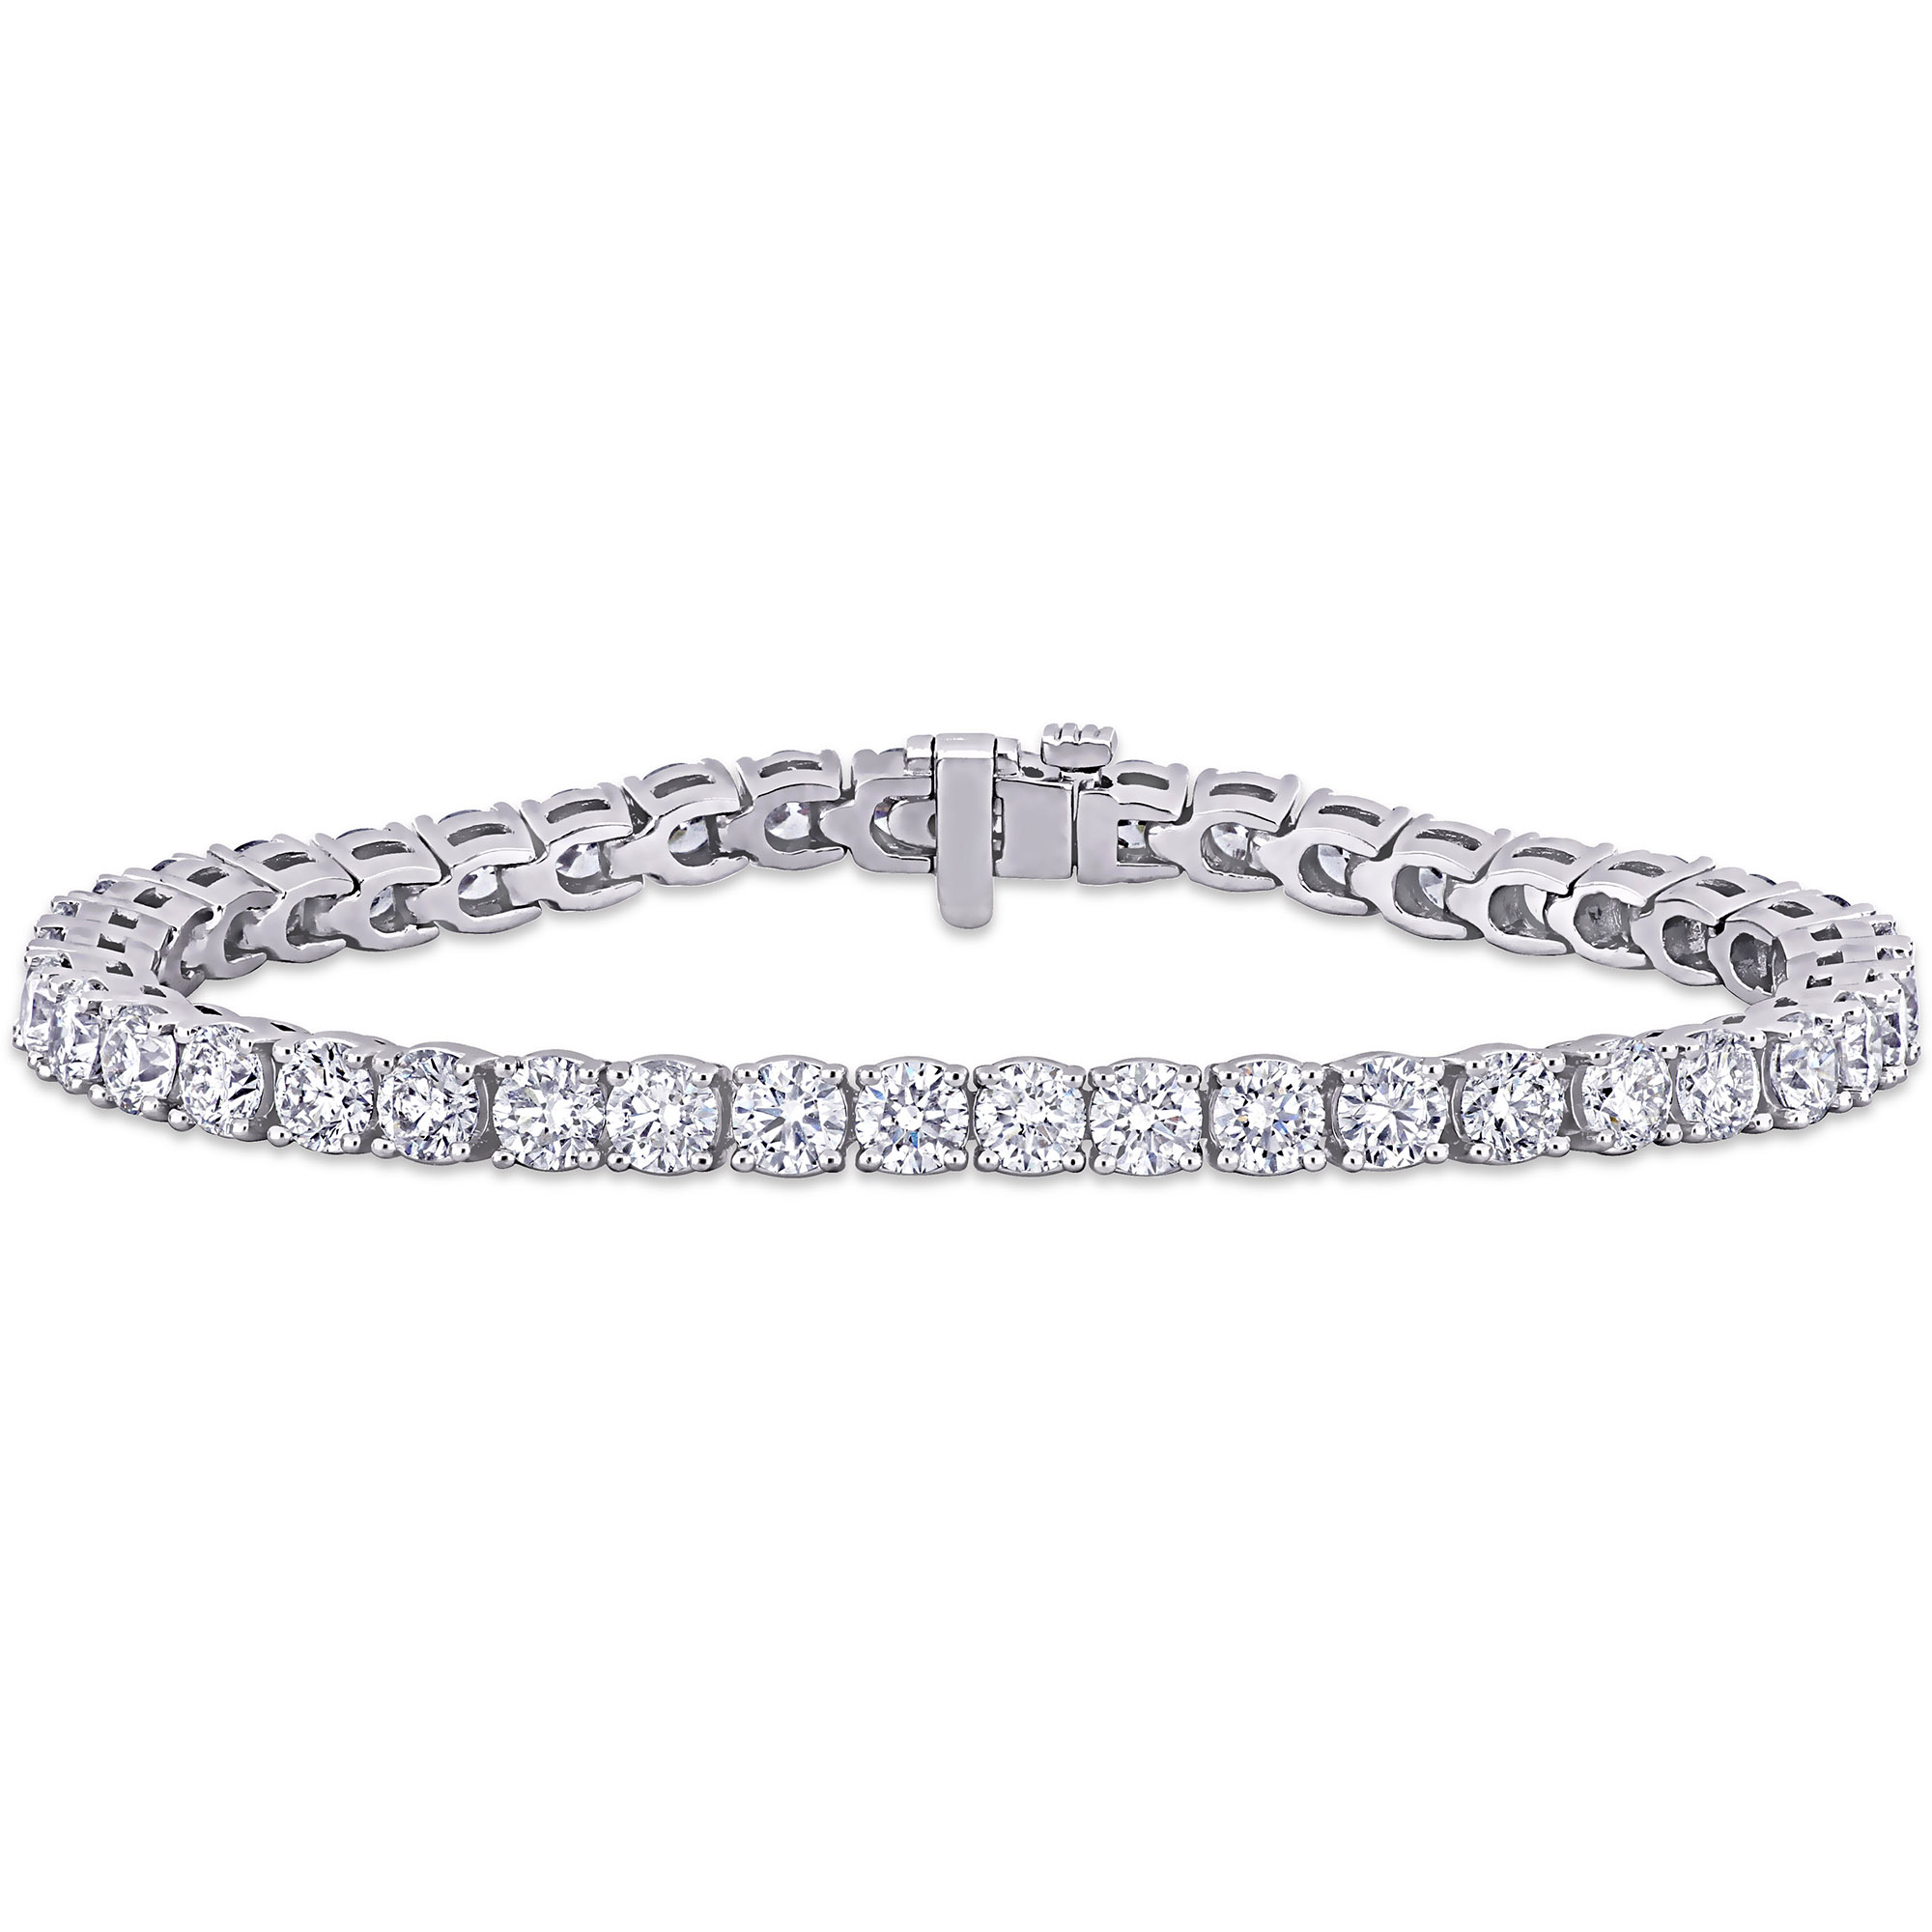 10 1/4 CT TW Diamond Tennis Bracelet | Delmar Jewelers